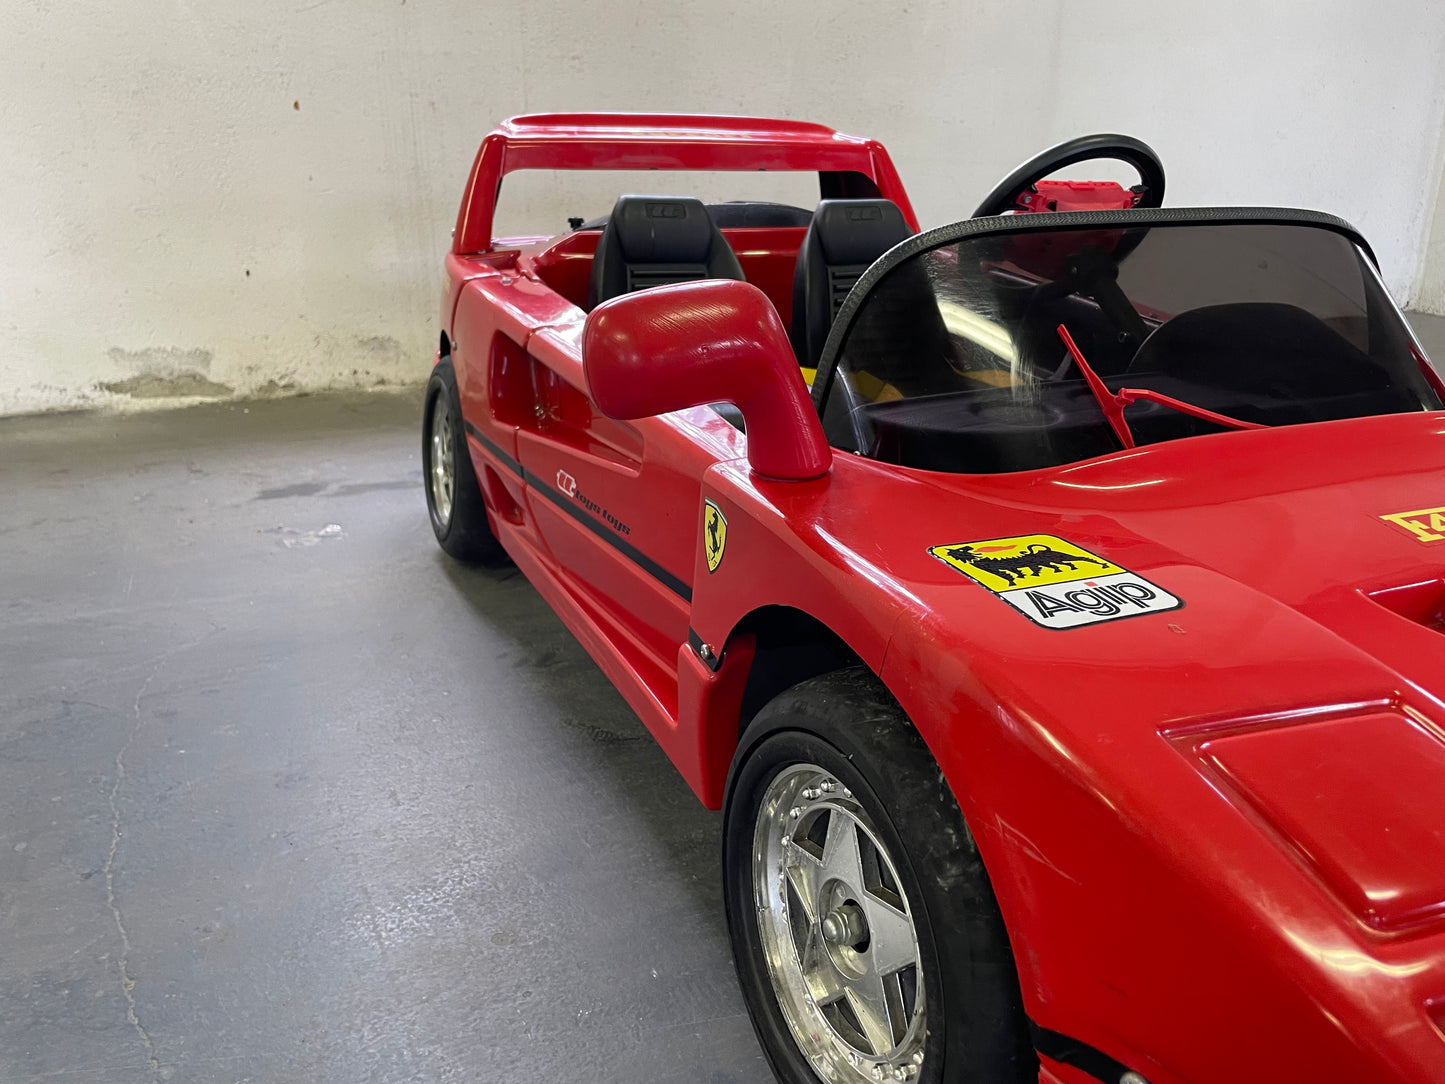 TT Toys Toys Ferrari F40-Style Electric Go-Kart